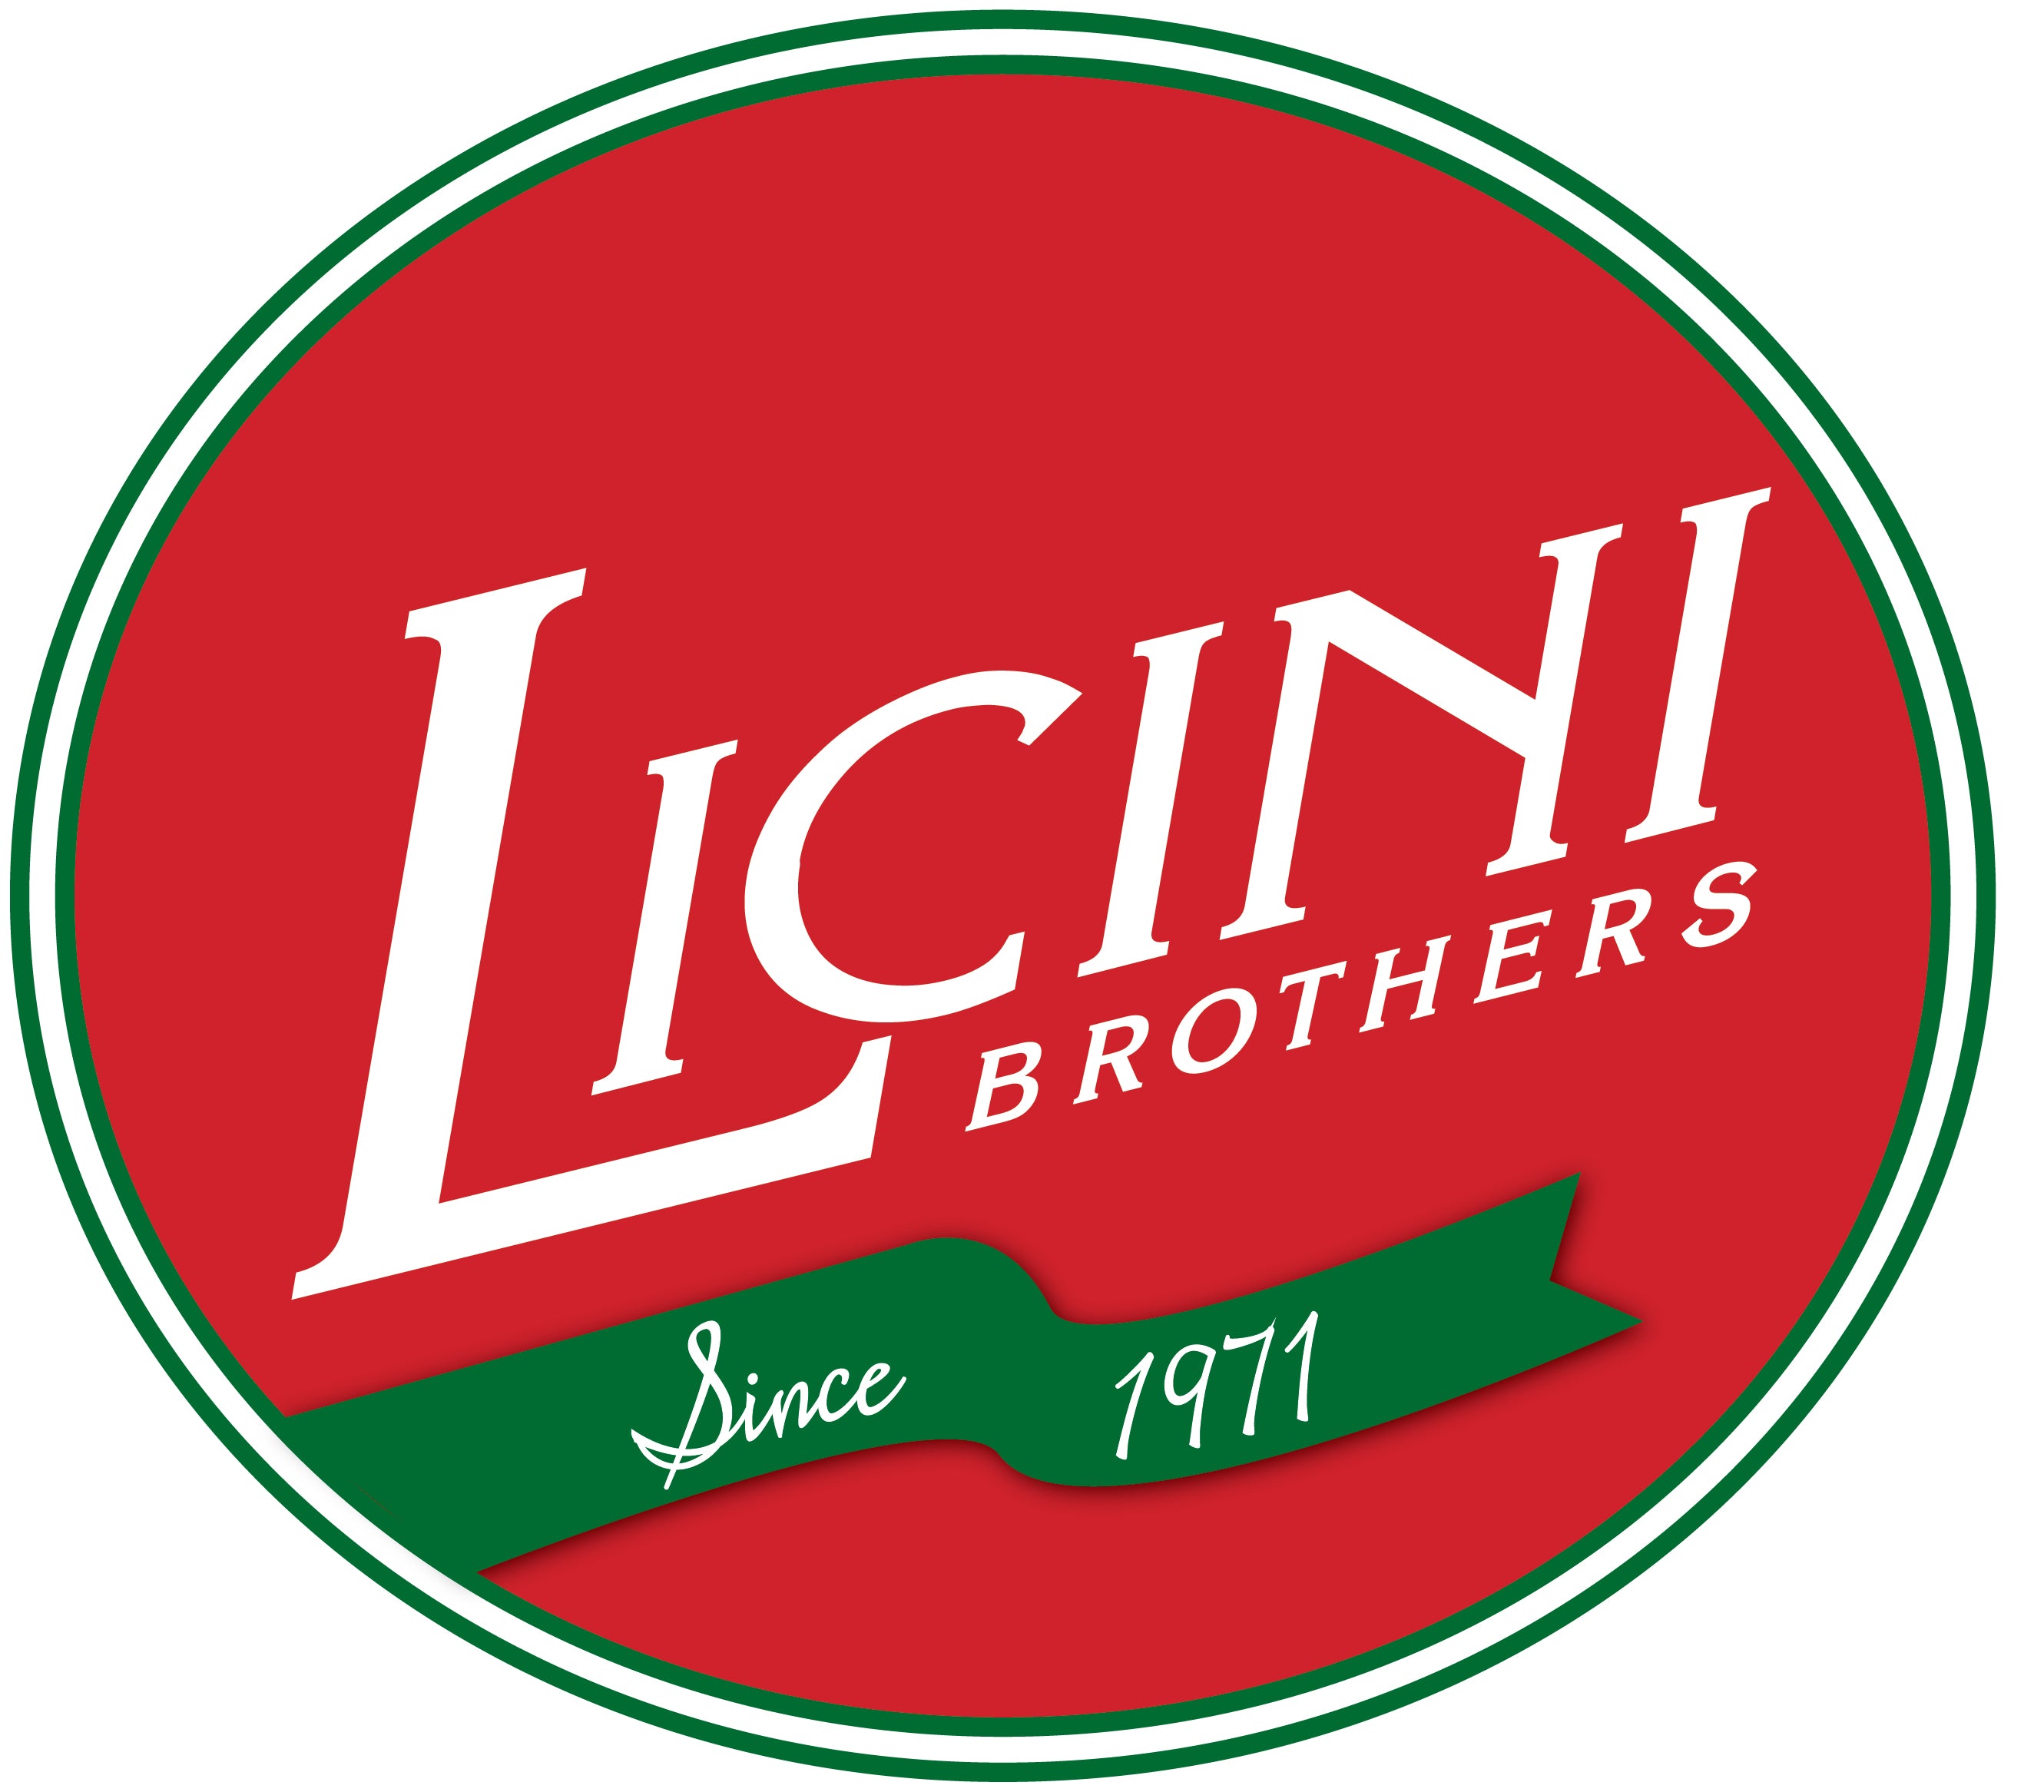 Licini Brothers